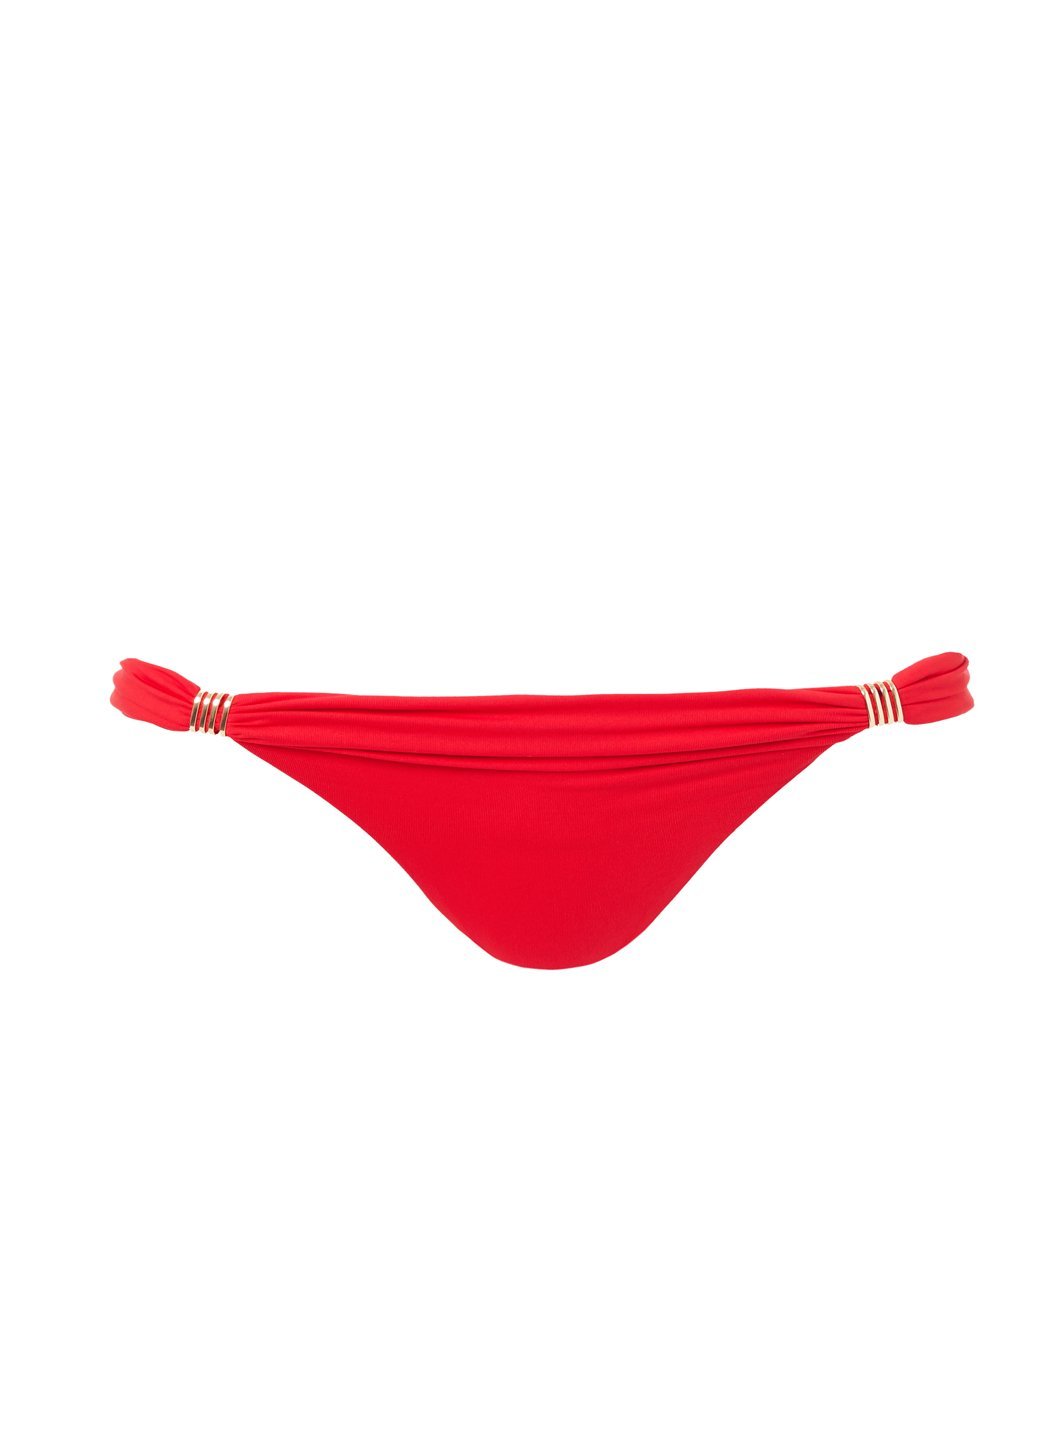 Grenada Red Adjustable Hipster Bikini Bottom